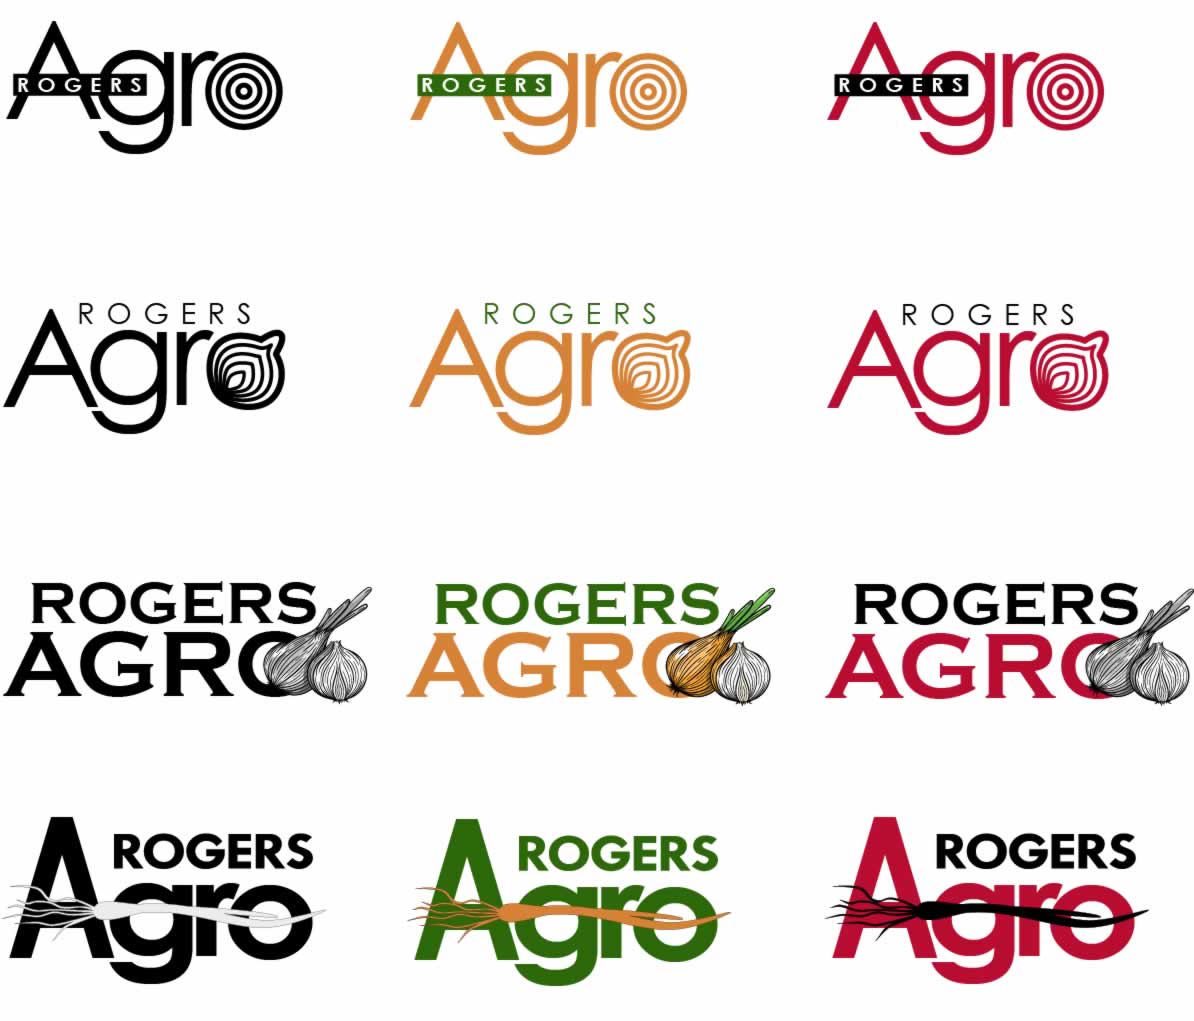 Rogers Agro Logos